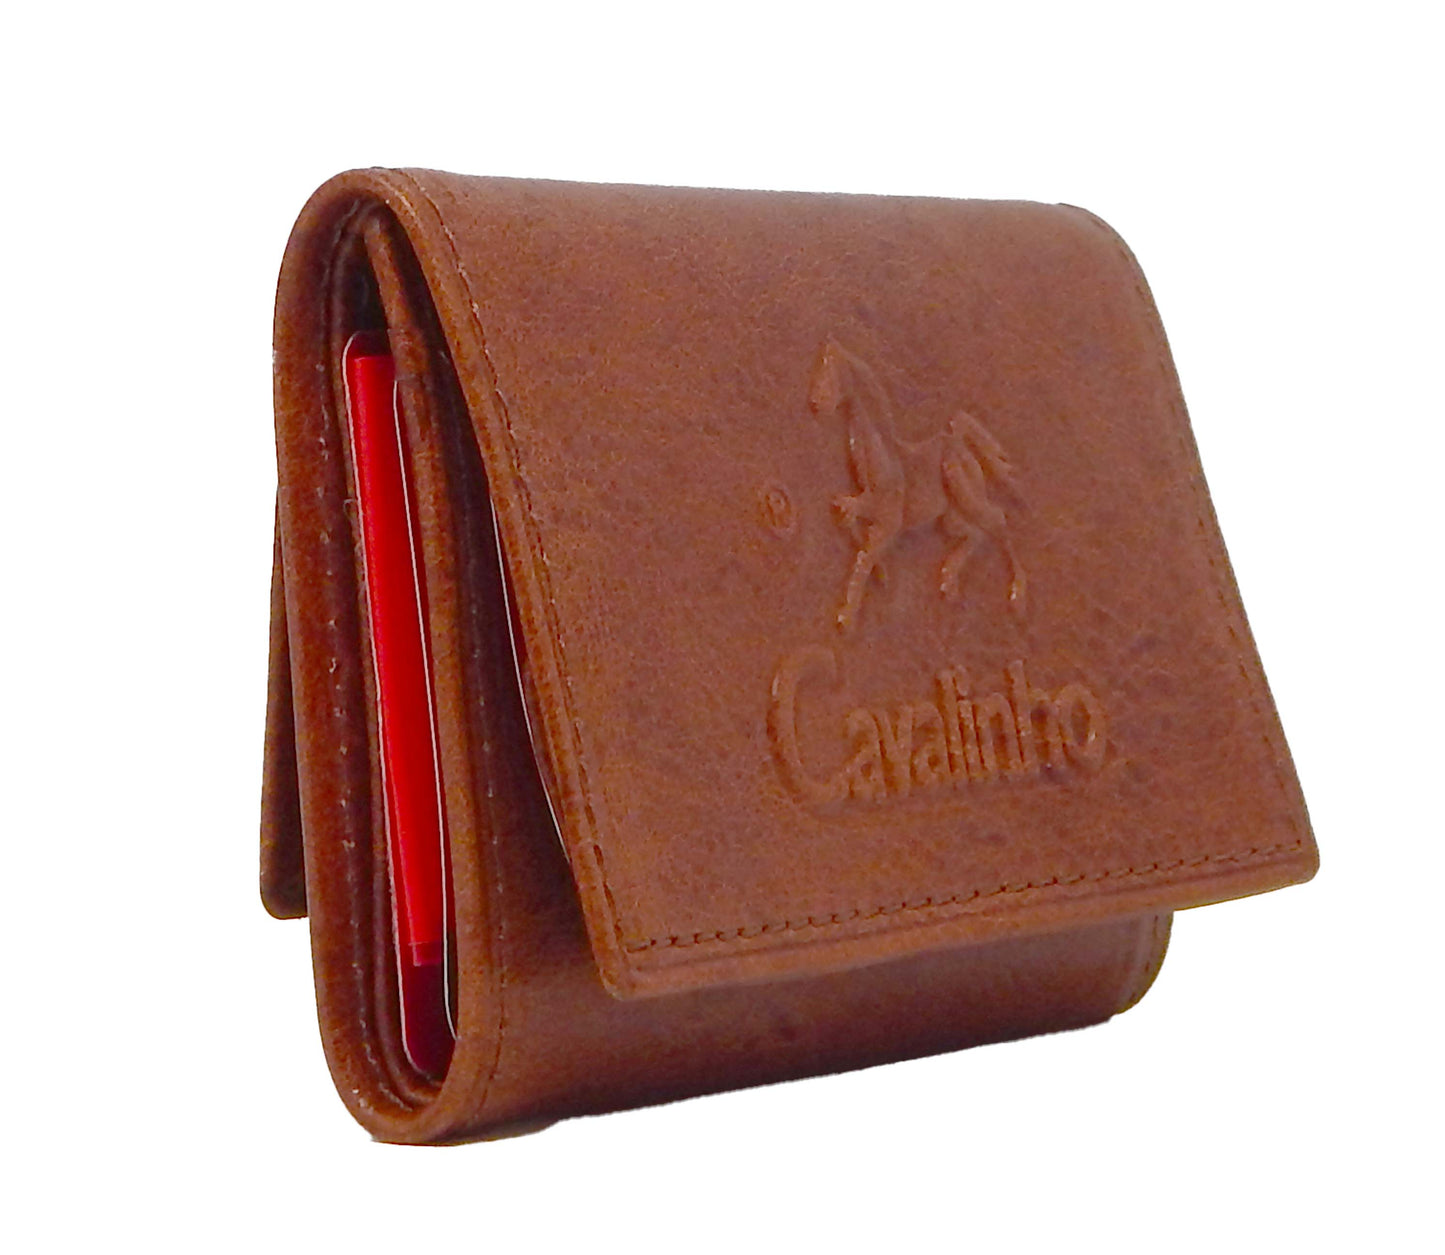 Cavalinho Men's Compact Leather Wallet - SaddleBrown - 28610539.13.99_2